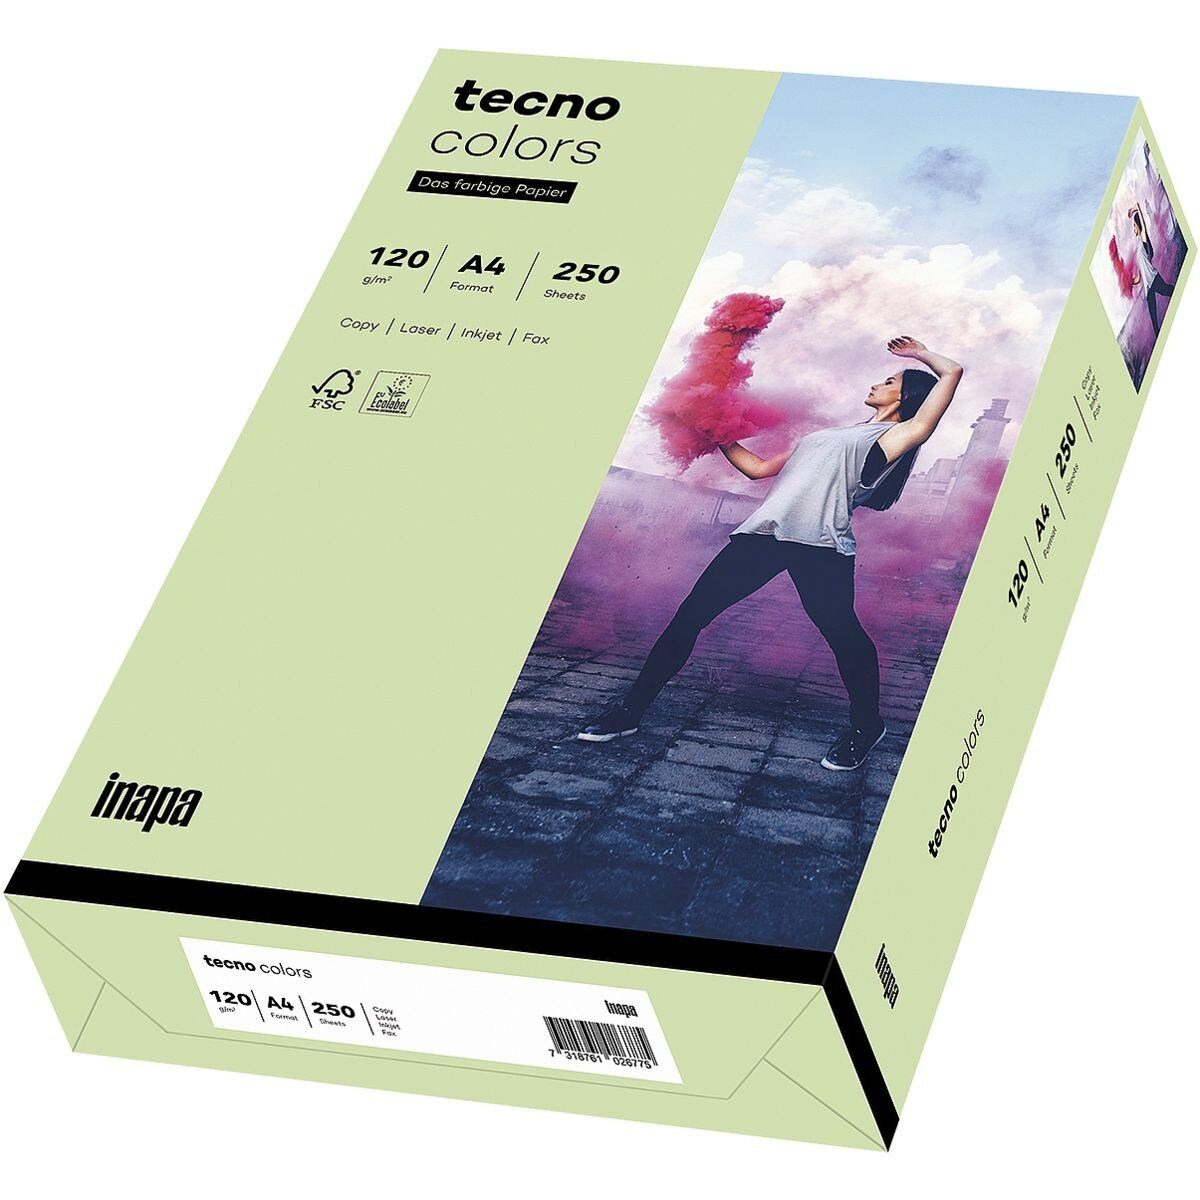 Inapa tecno Drucker- und Kopierpapier Rainbow / tecno Colors, Pastellfarben, Format DIN A4, 120 g/m², 250 Blatt mittelgrün | Papier